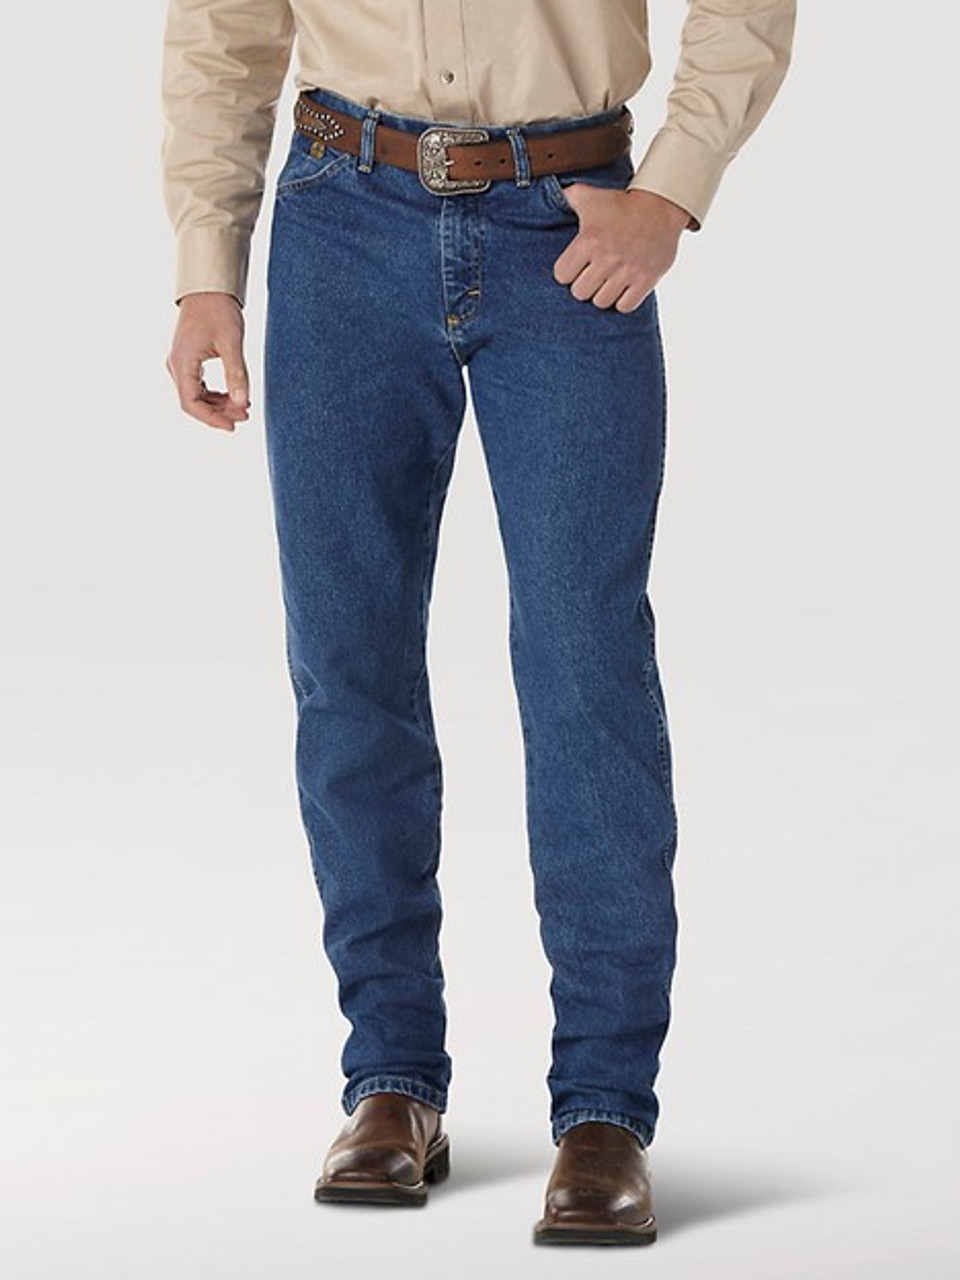 13MGSHD Wrangler Men's George Strait Cowboy Cut® Original Fit Jean